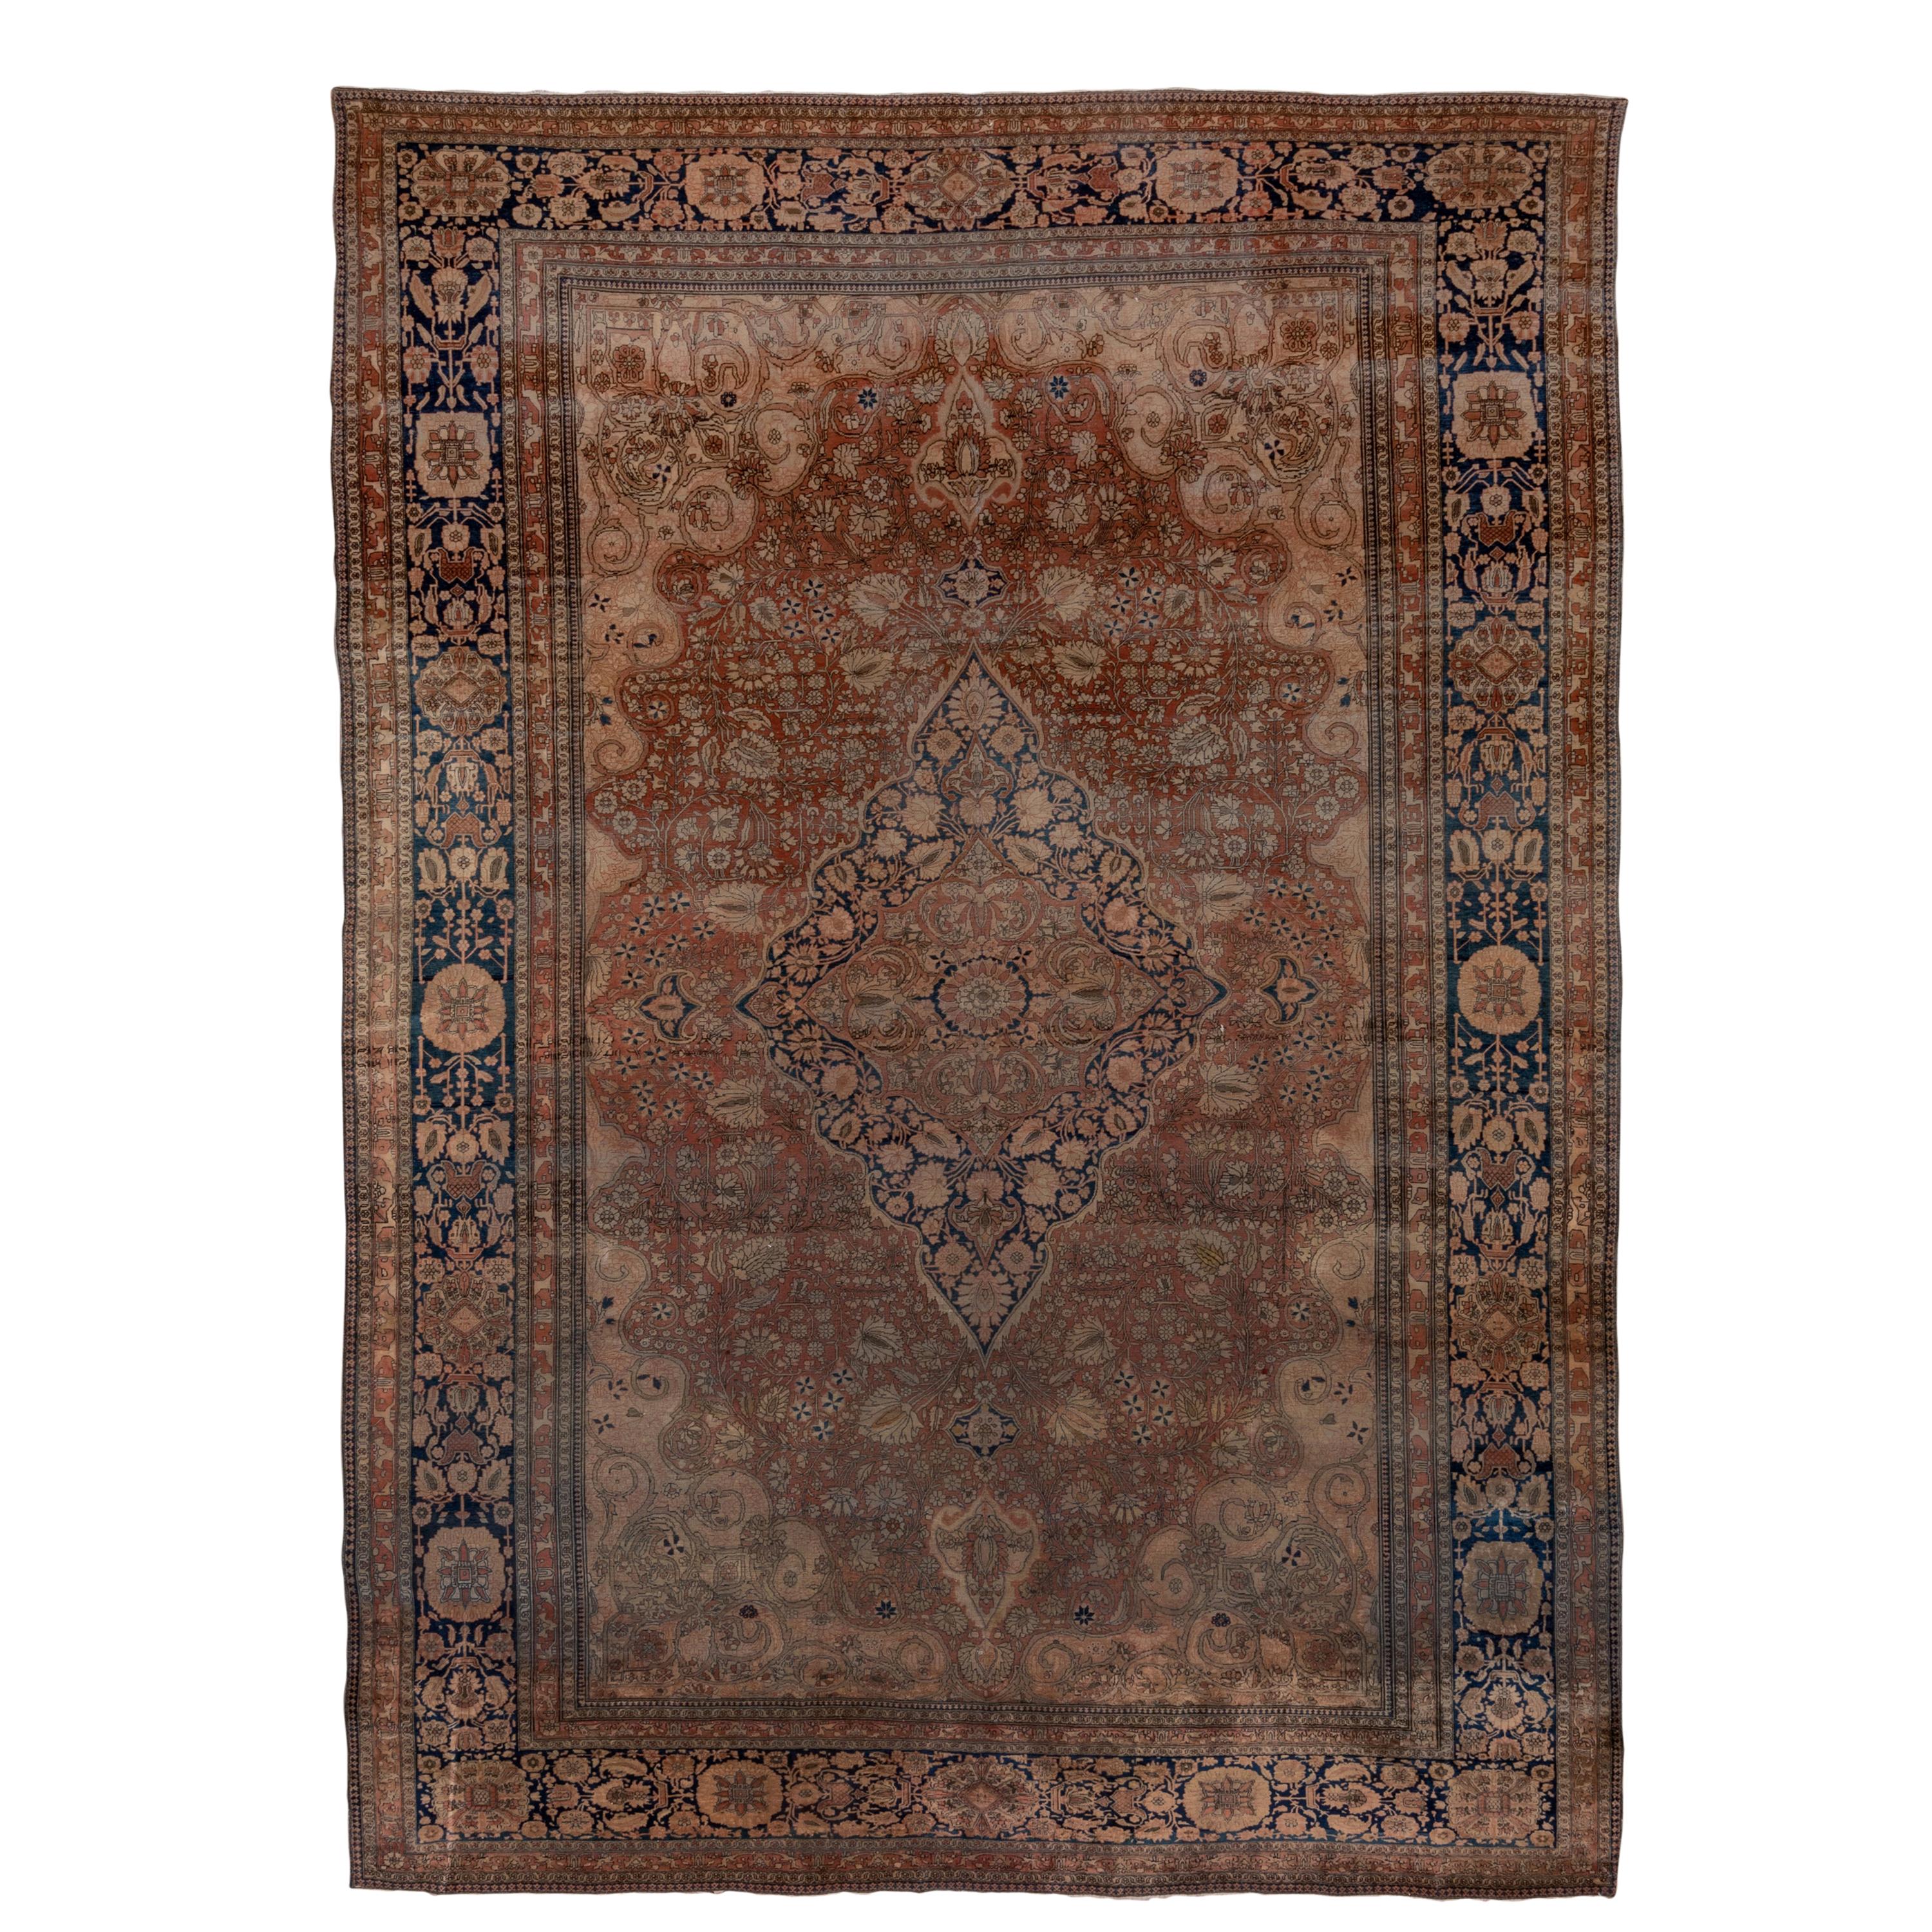 Antique Persian Kashan Carpet, Rust Field, Center Medallion, Blue Borders